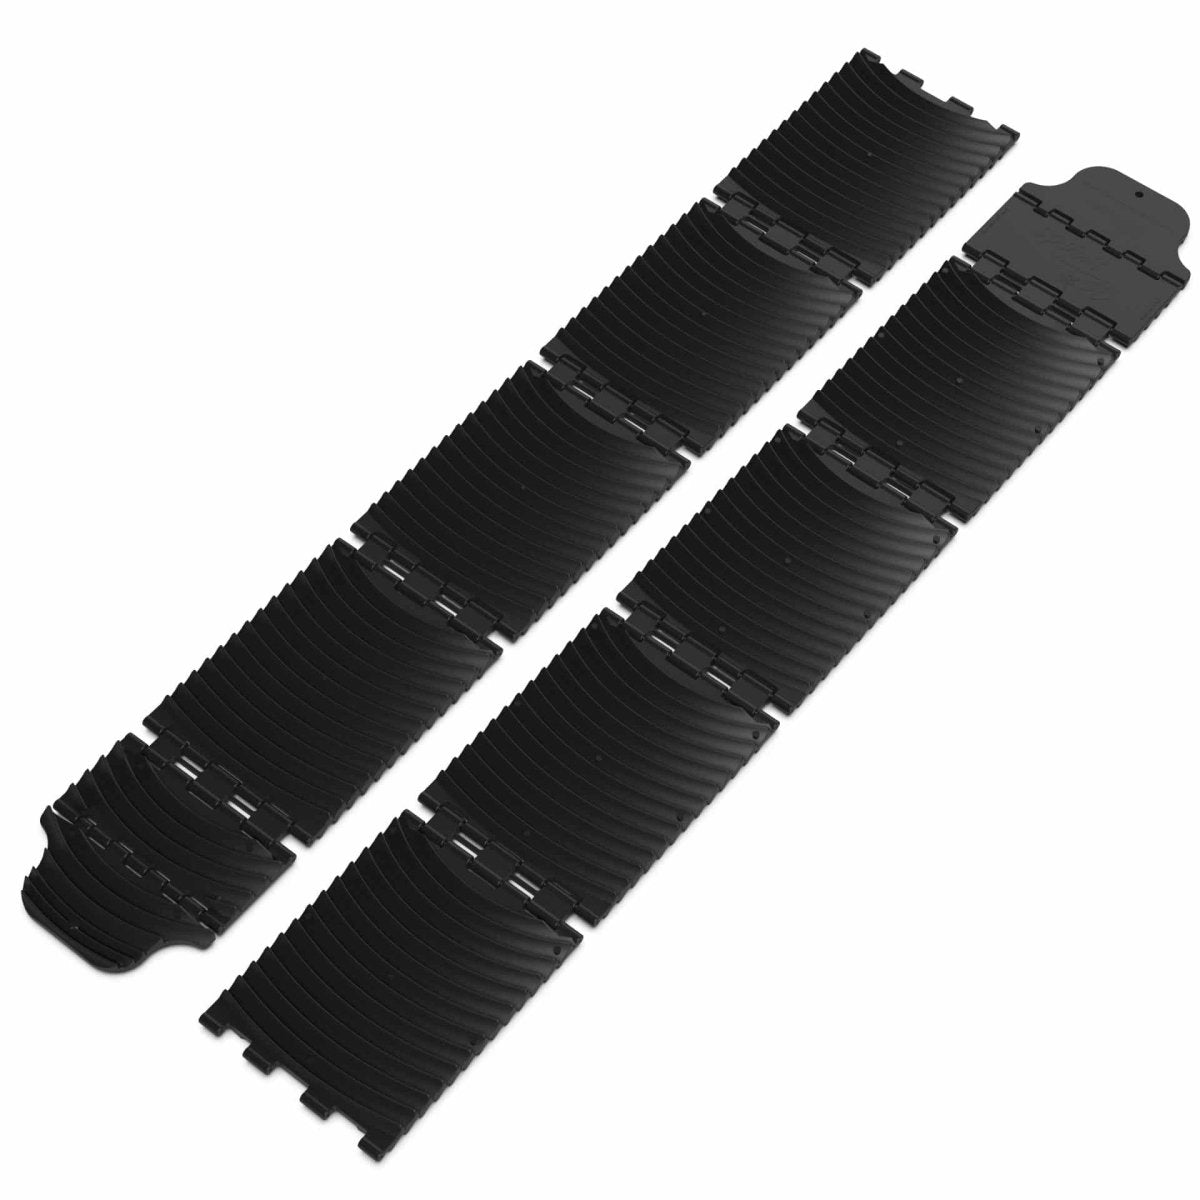 GoTreads XL Folding Recovery Boards Black - (1x Pair) in Storage Bag | GoTreads | A247 Gear